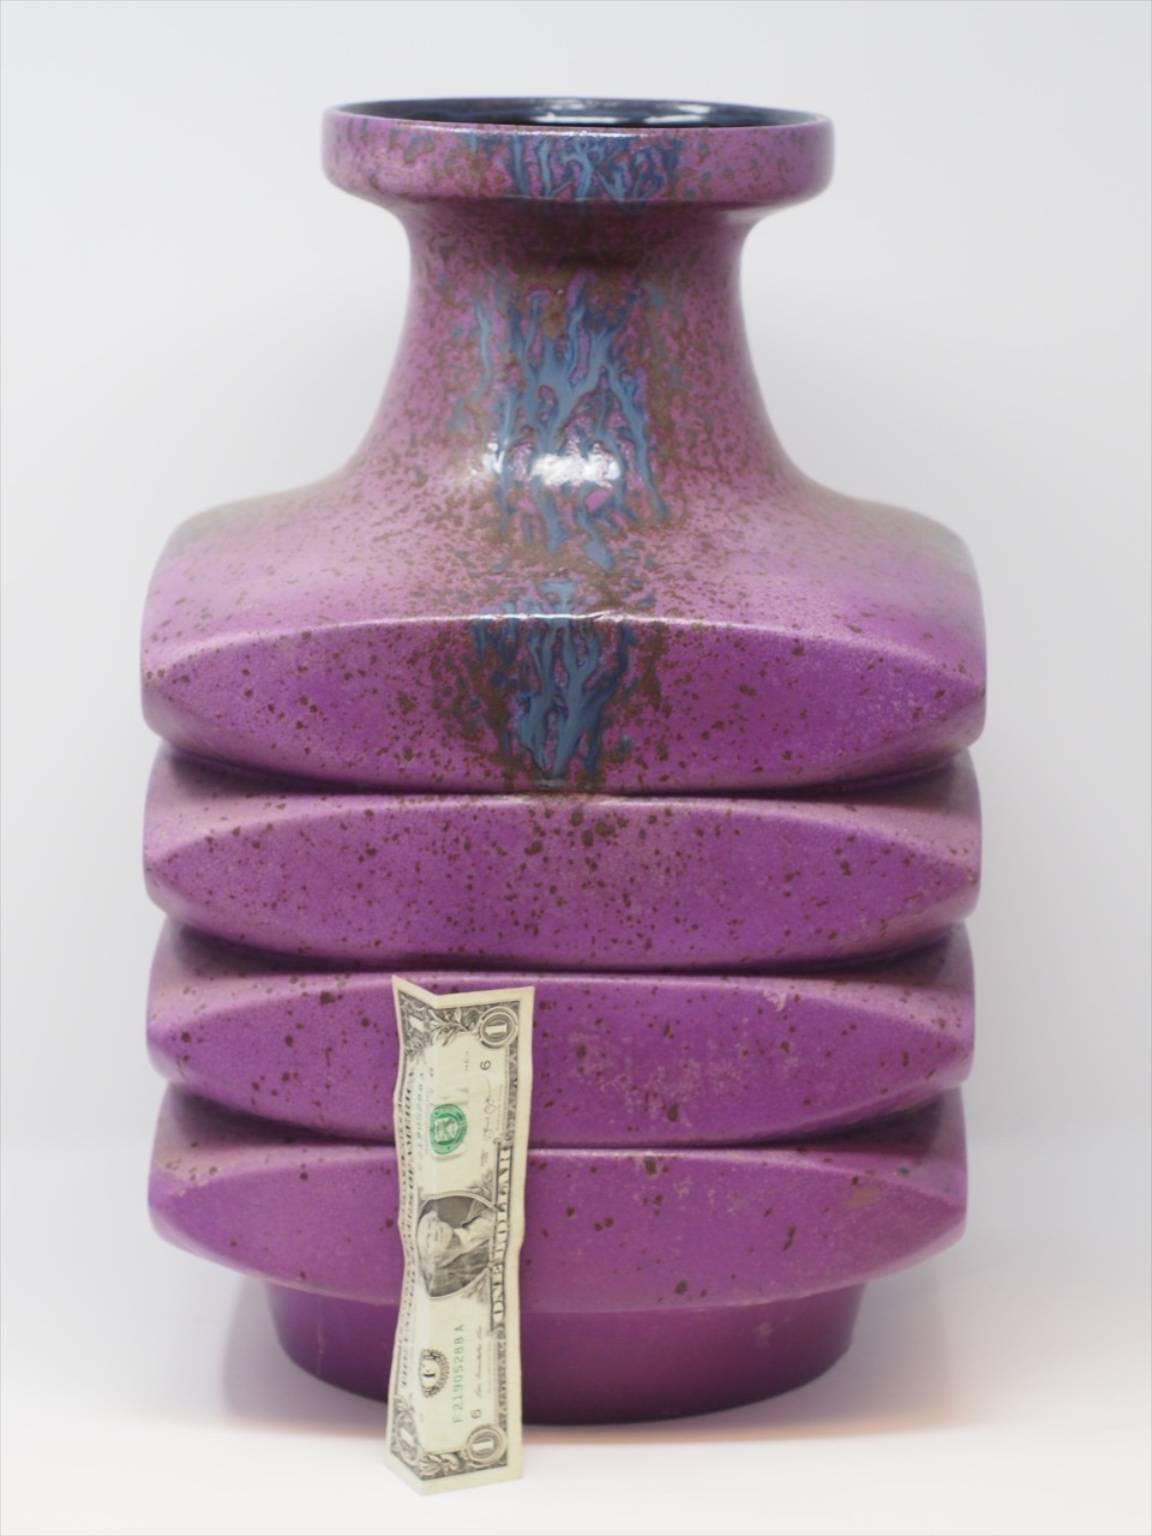 Very larger German ceramic vase with beautiful purple glaze.